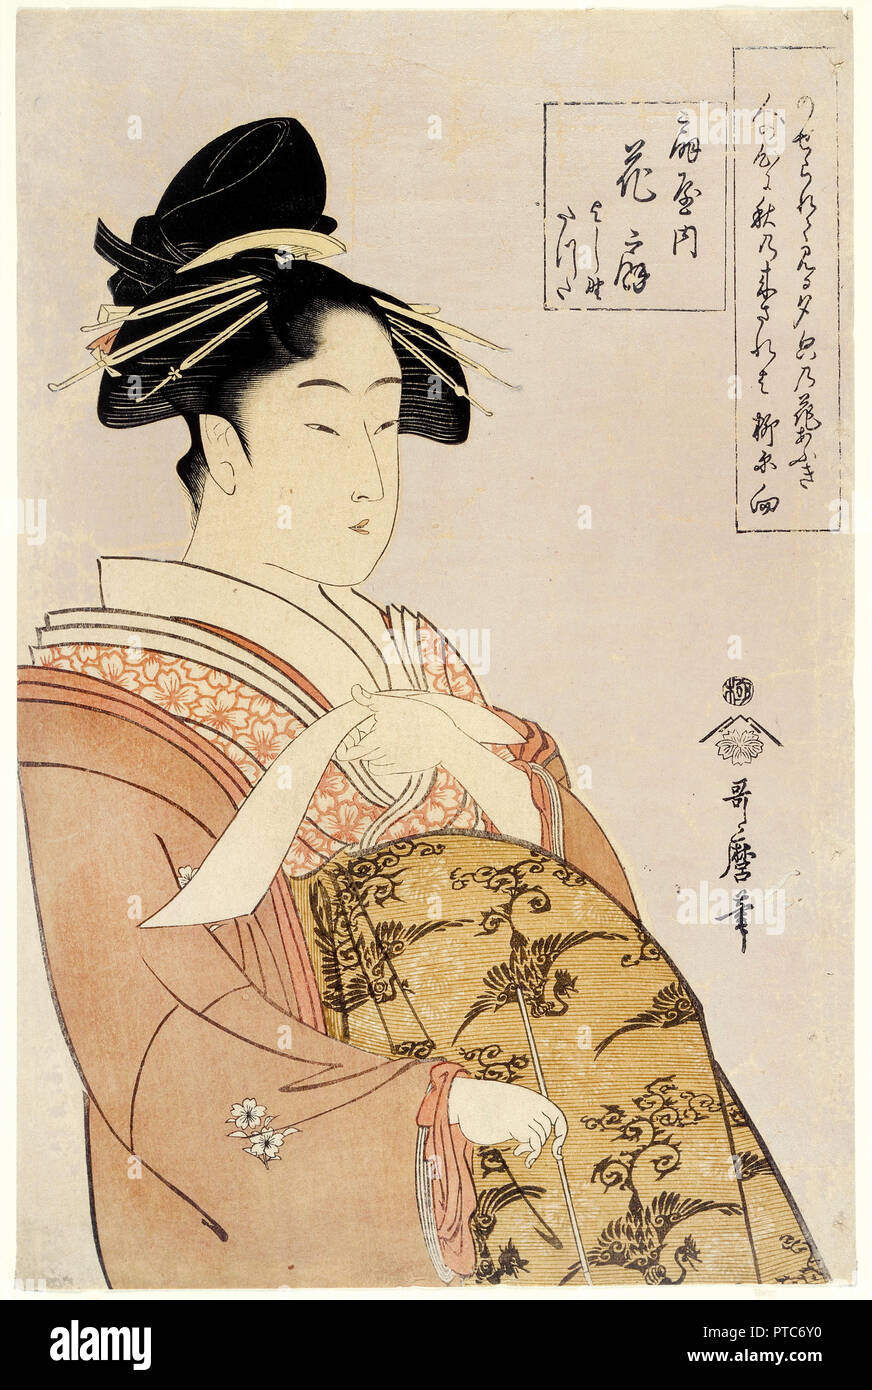 Kitagawa Utamaro, Kurtisane Hanao-gi der O-gija Haus, ca. 1793-1794, Farbe holzschnitt, Minneapolis Institute of Arts, USA. Stockfoto